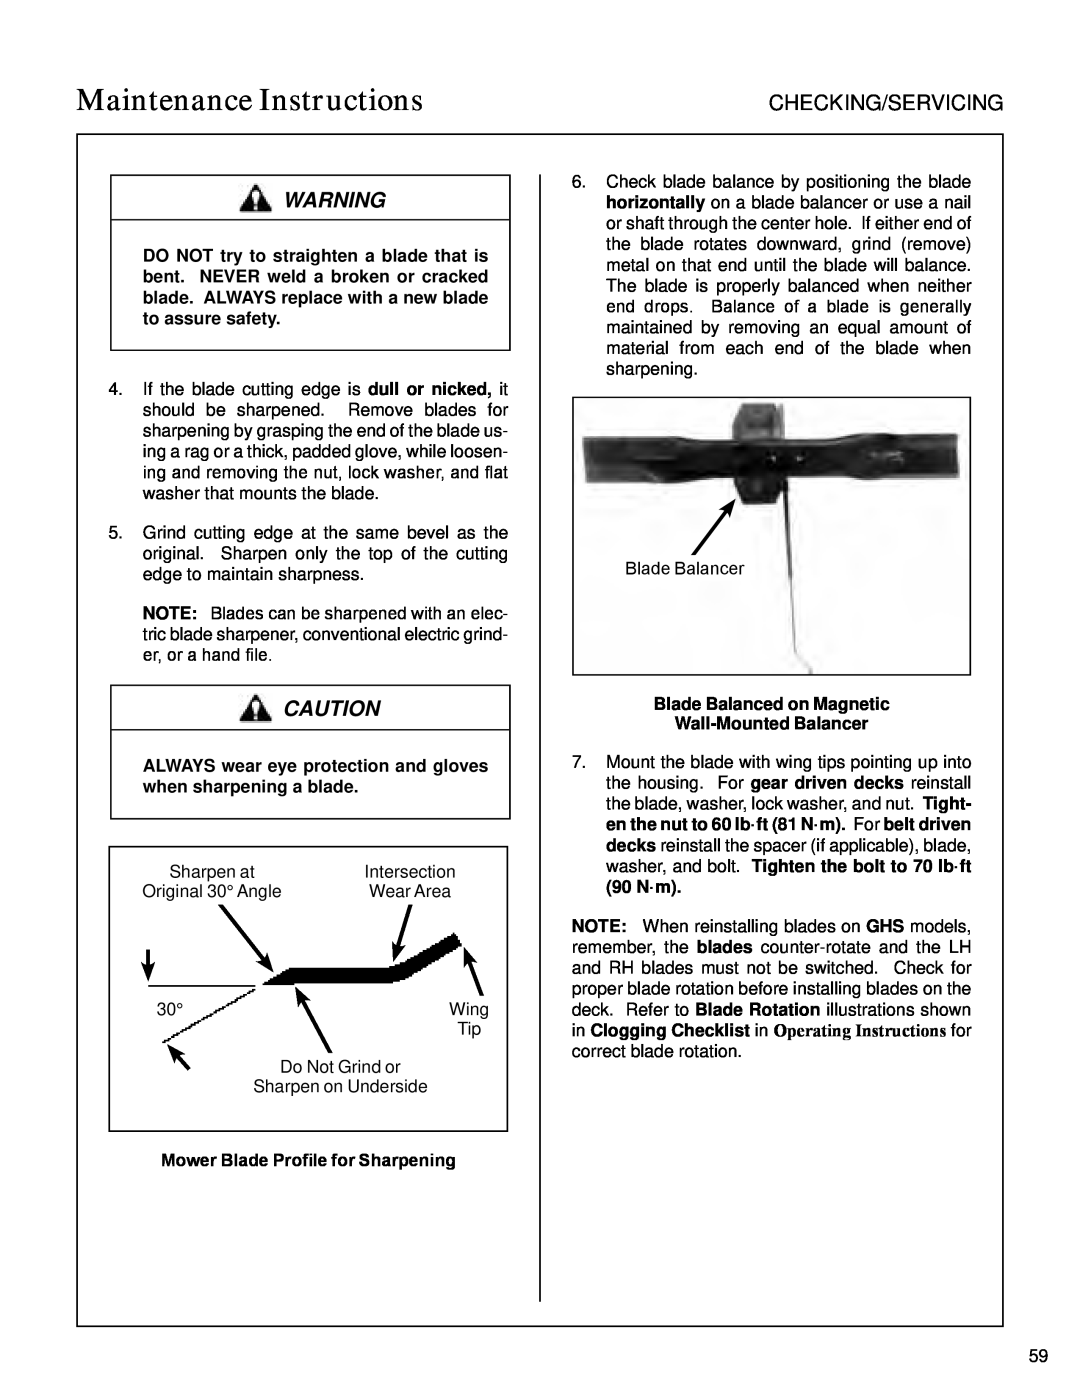 Walker S14 Mower Blade Profile for Sharpening, Blade Balanced on Magnetic Wall-MountedBalancer, Maintenance Instructions 